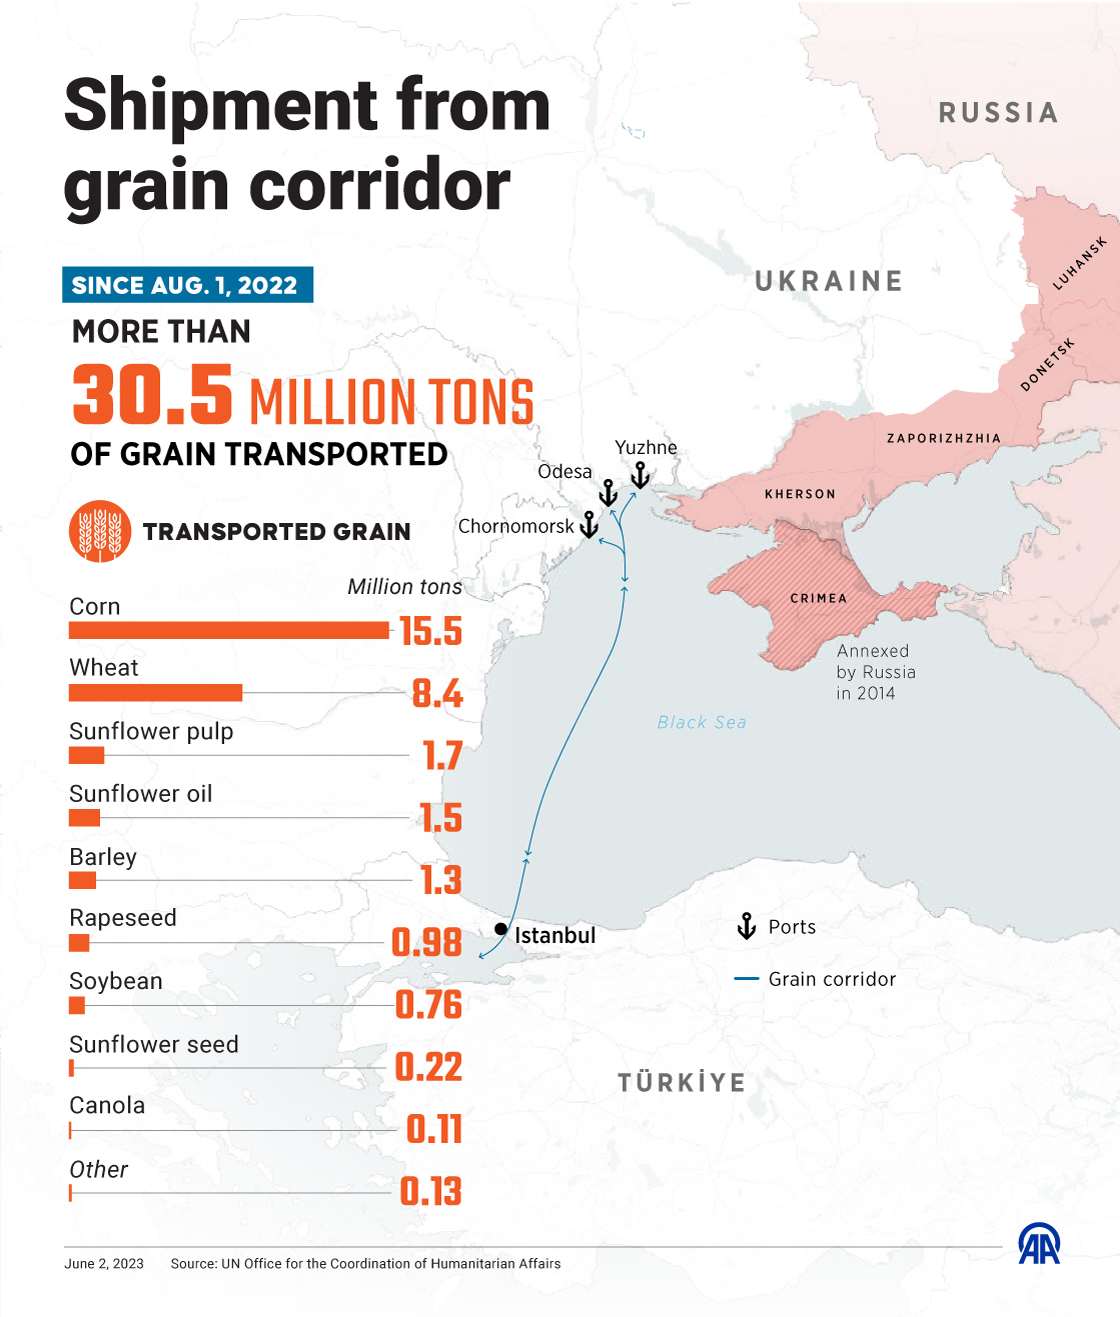 Shipment from grain corridor